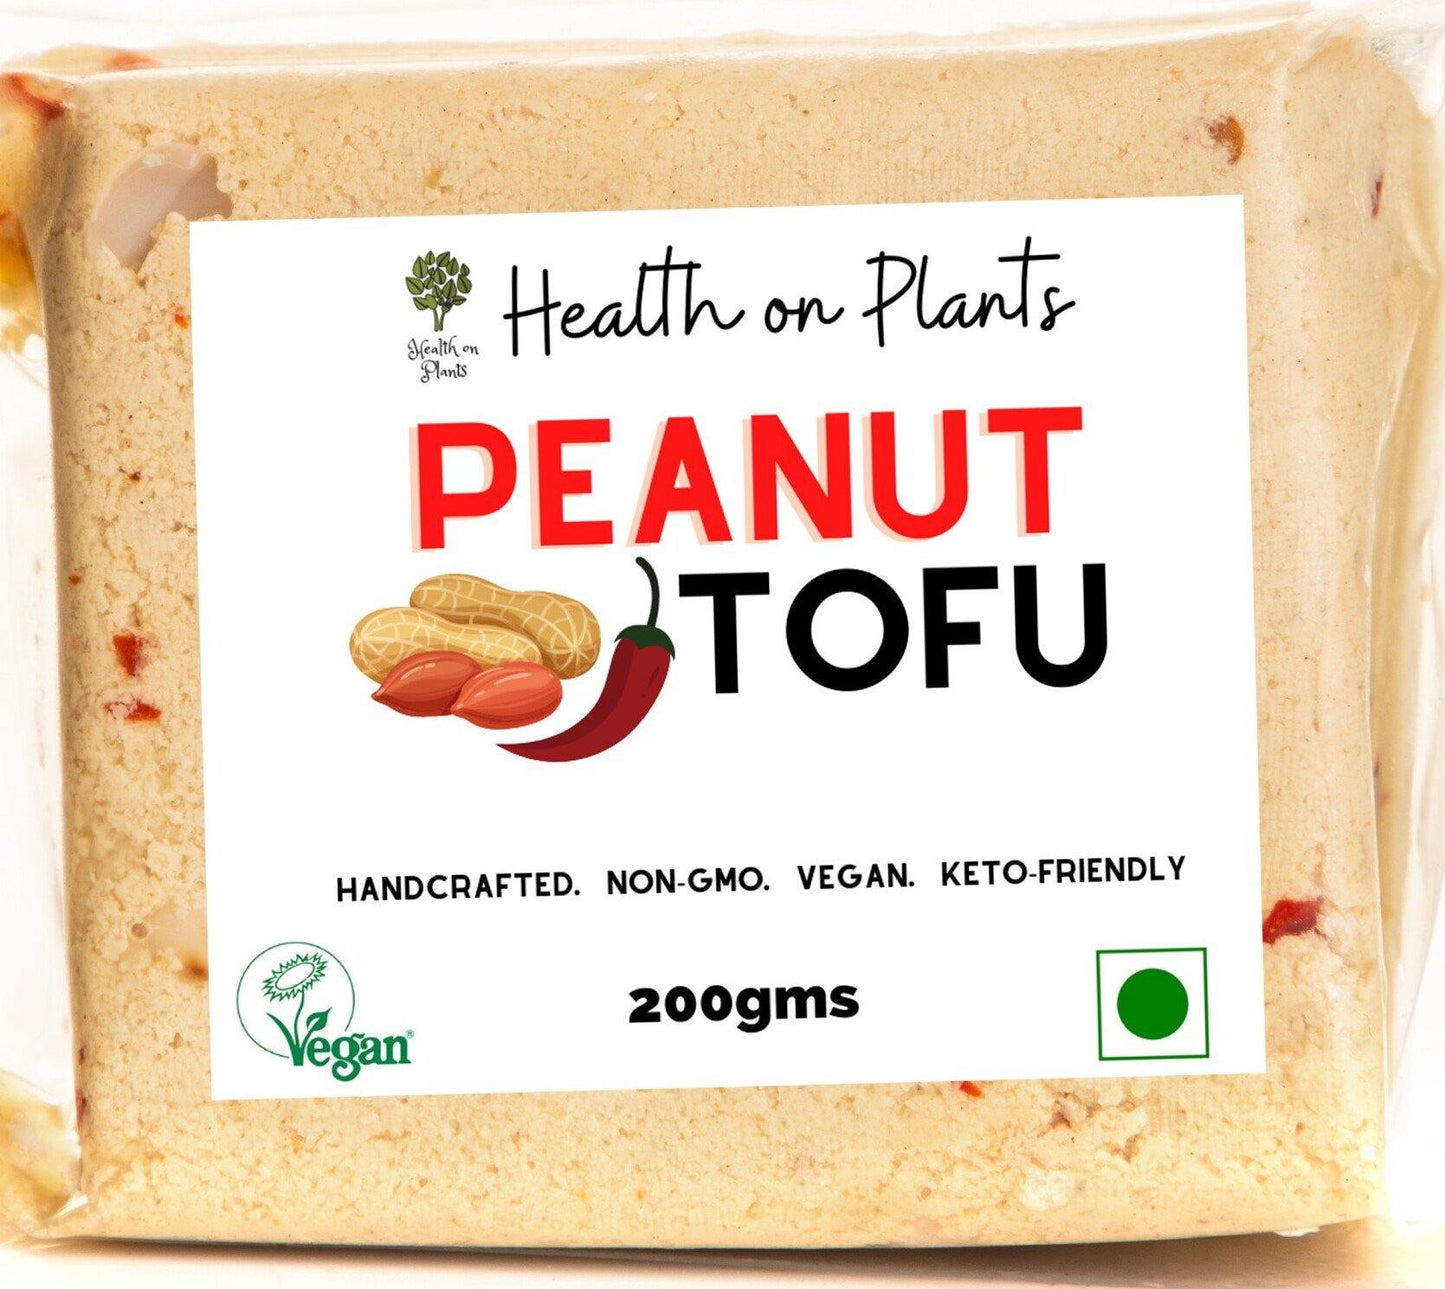 Peanut Tofu freeshipping - healthonplants